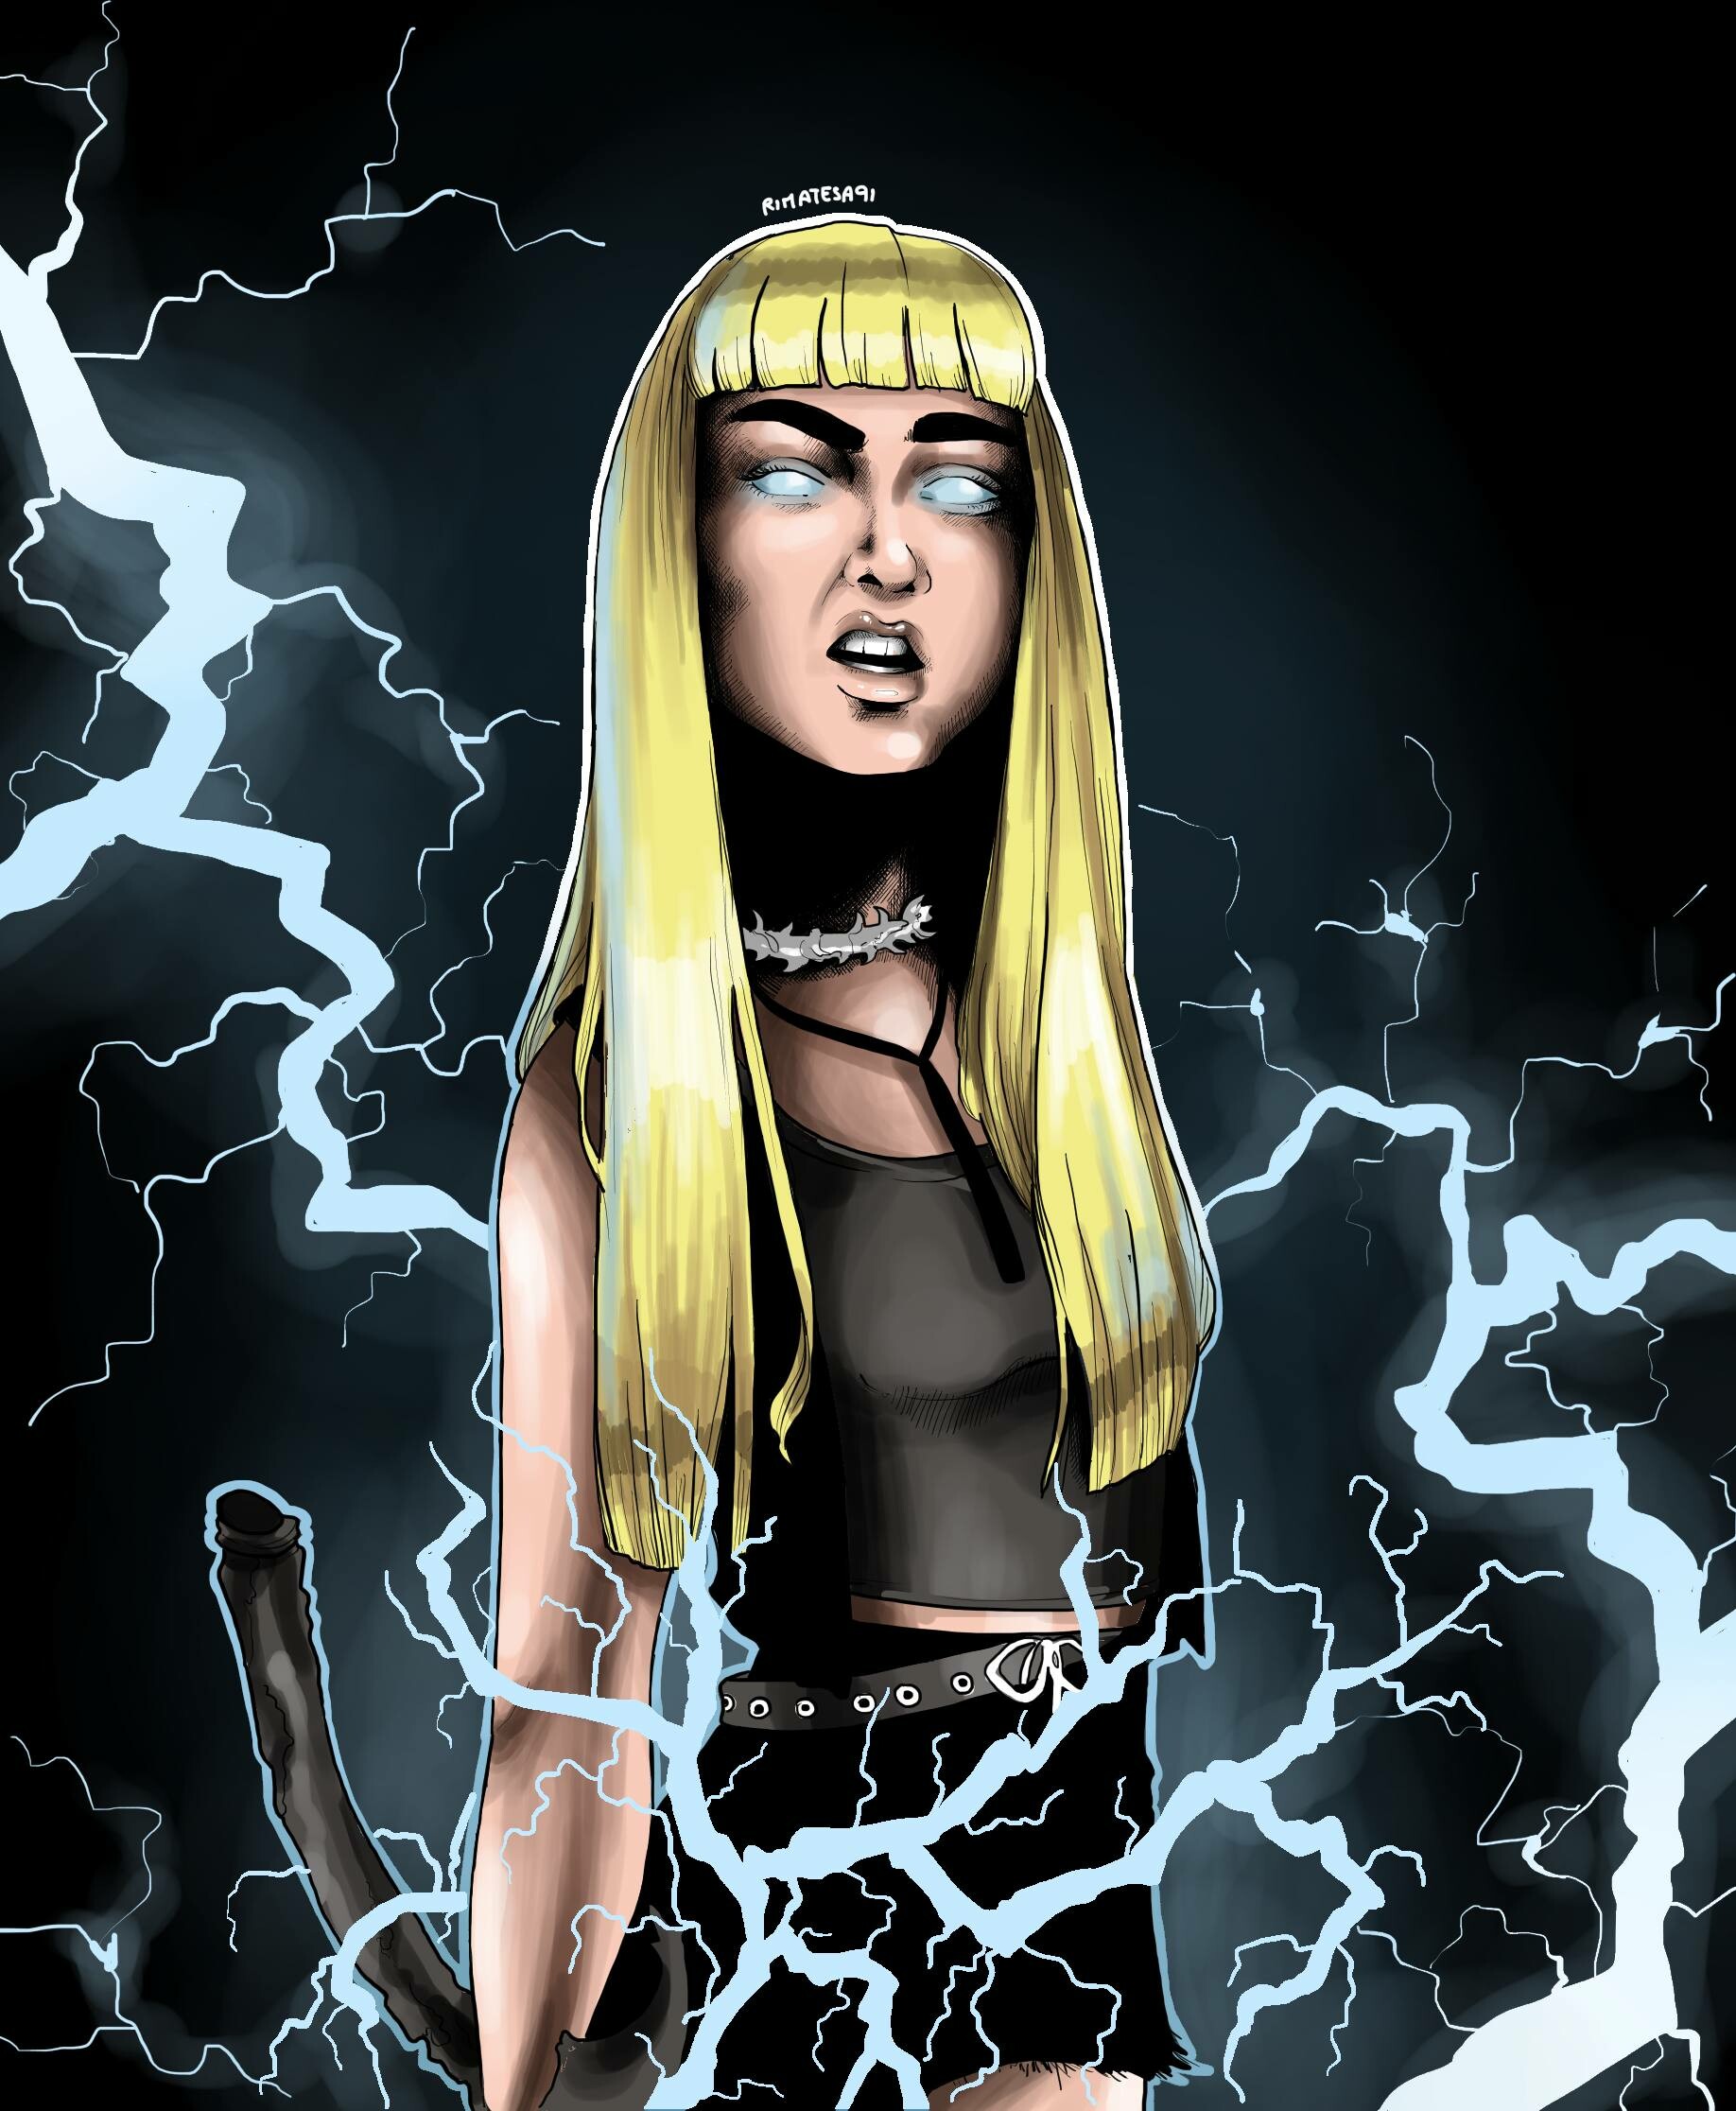 The New Mutants Poster Fan Art Magik by marvin223 on DeviantArt